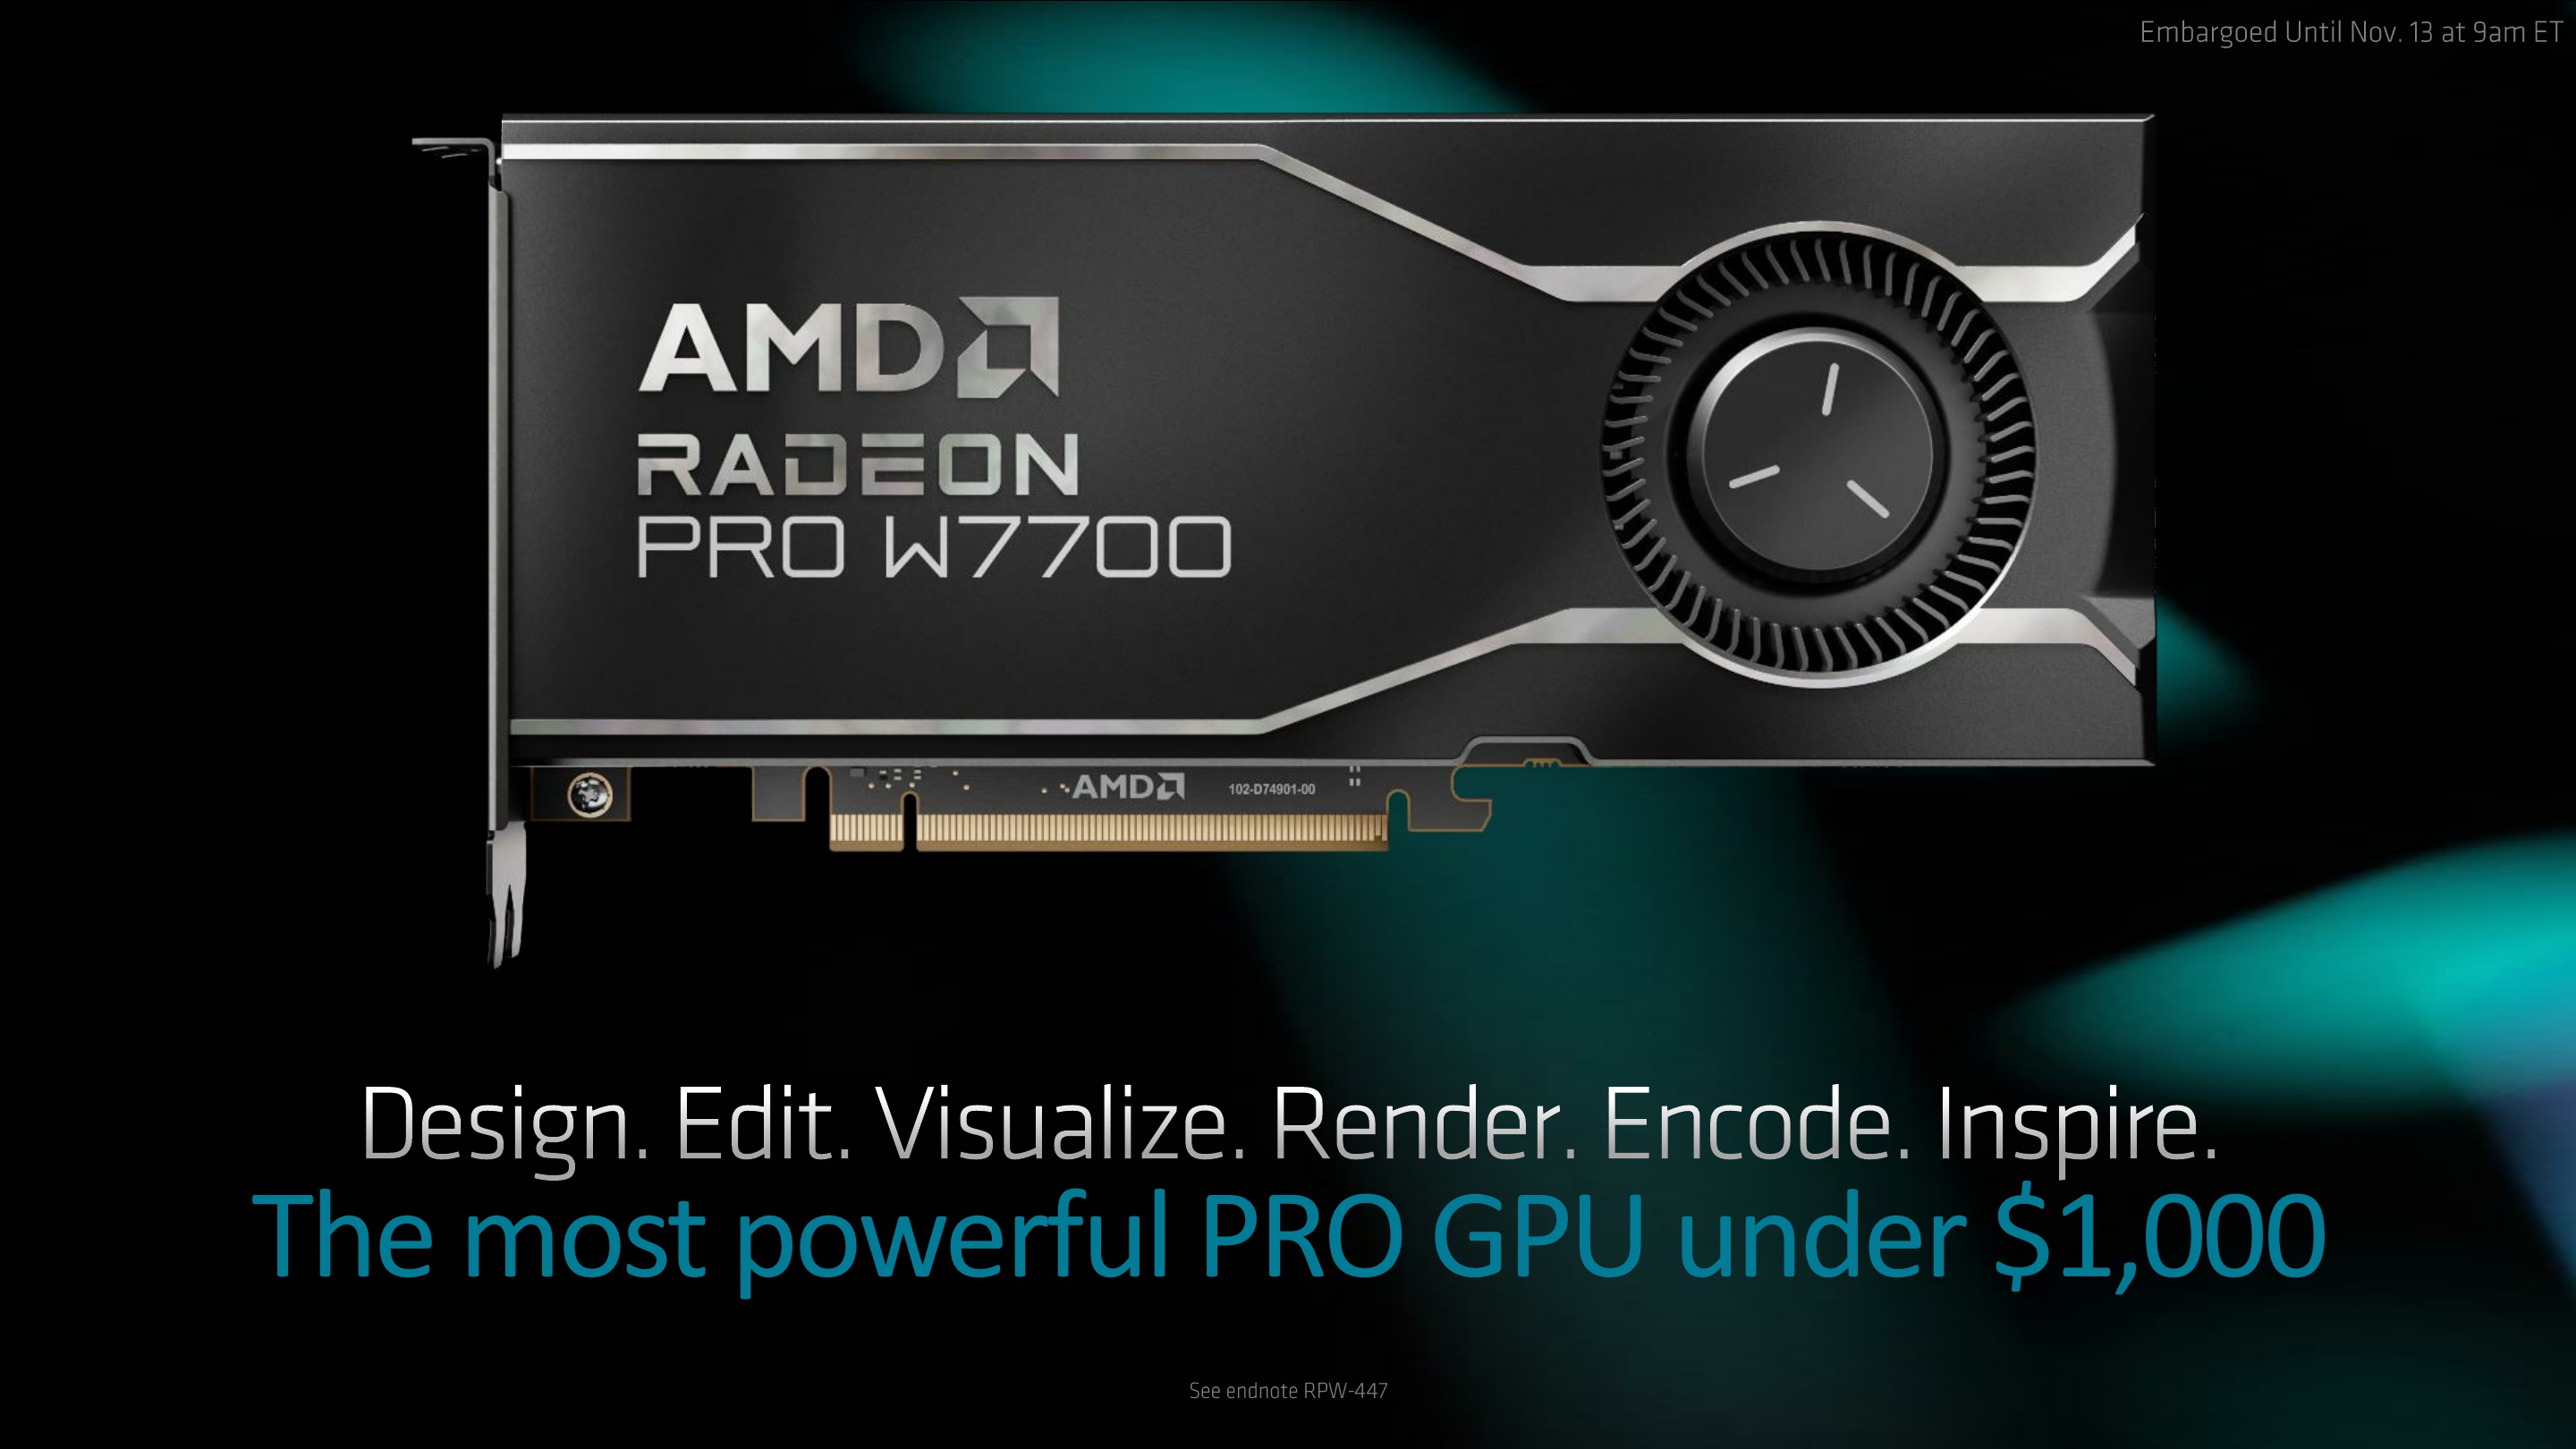 AMD Radeon PRO W7700 Press Deck - LEGAL-BRAND APPROVED_FINAL_9.jpg